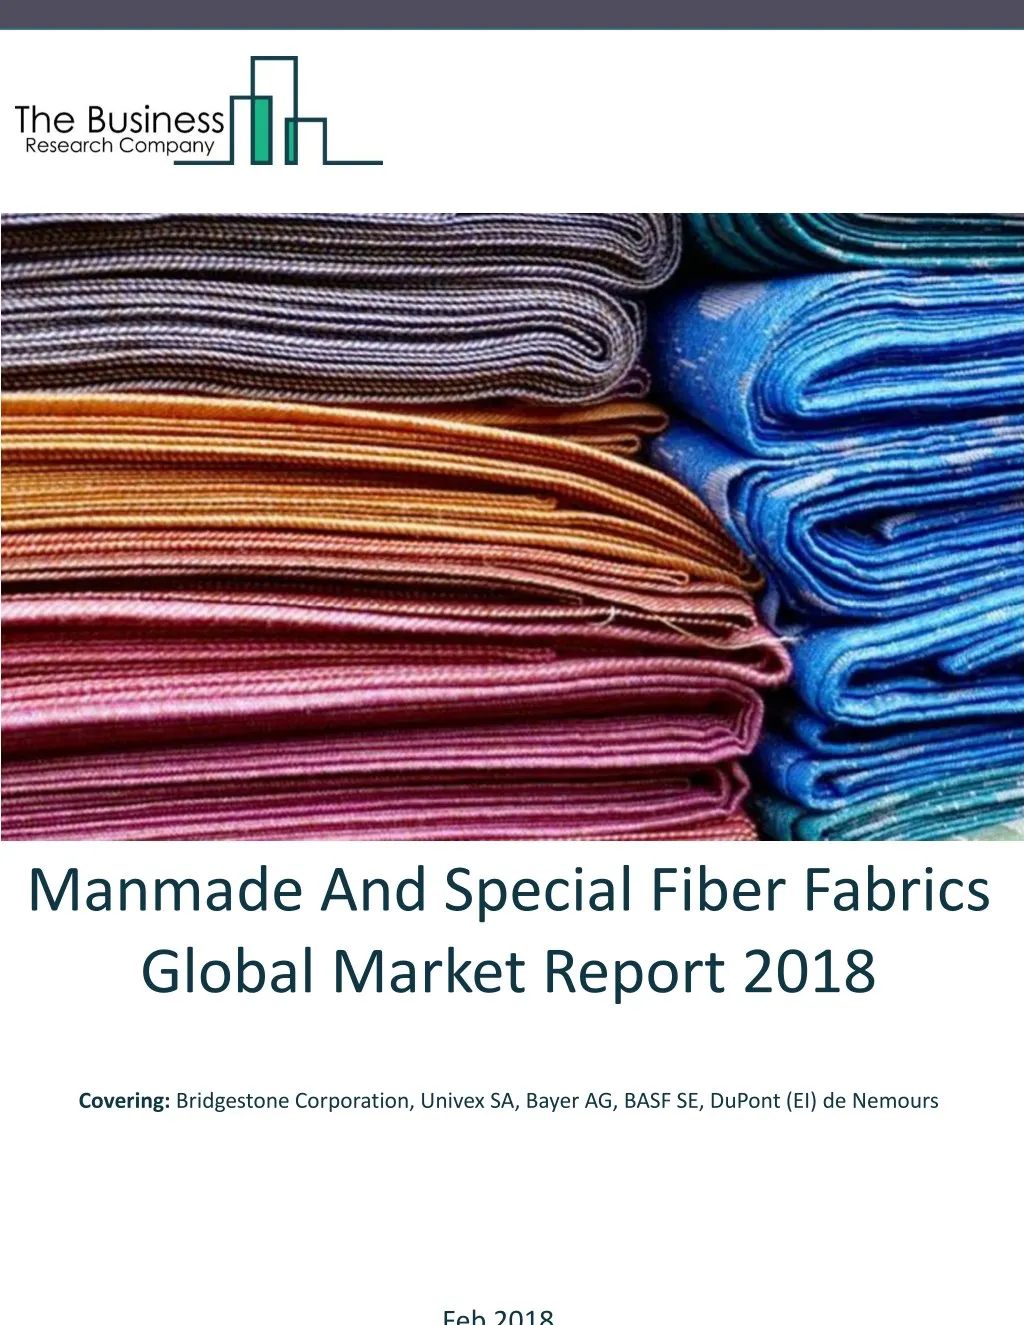 manmade and special fiber fabrics global market